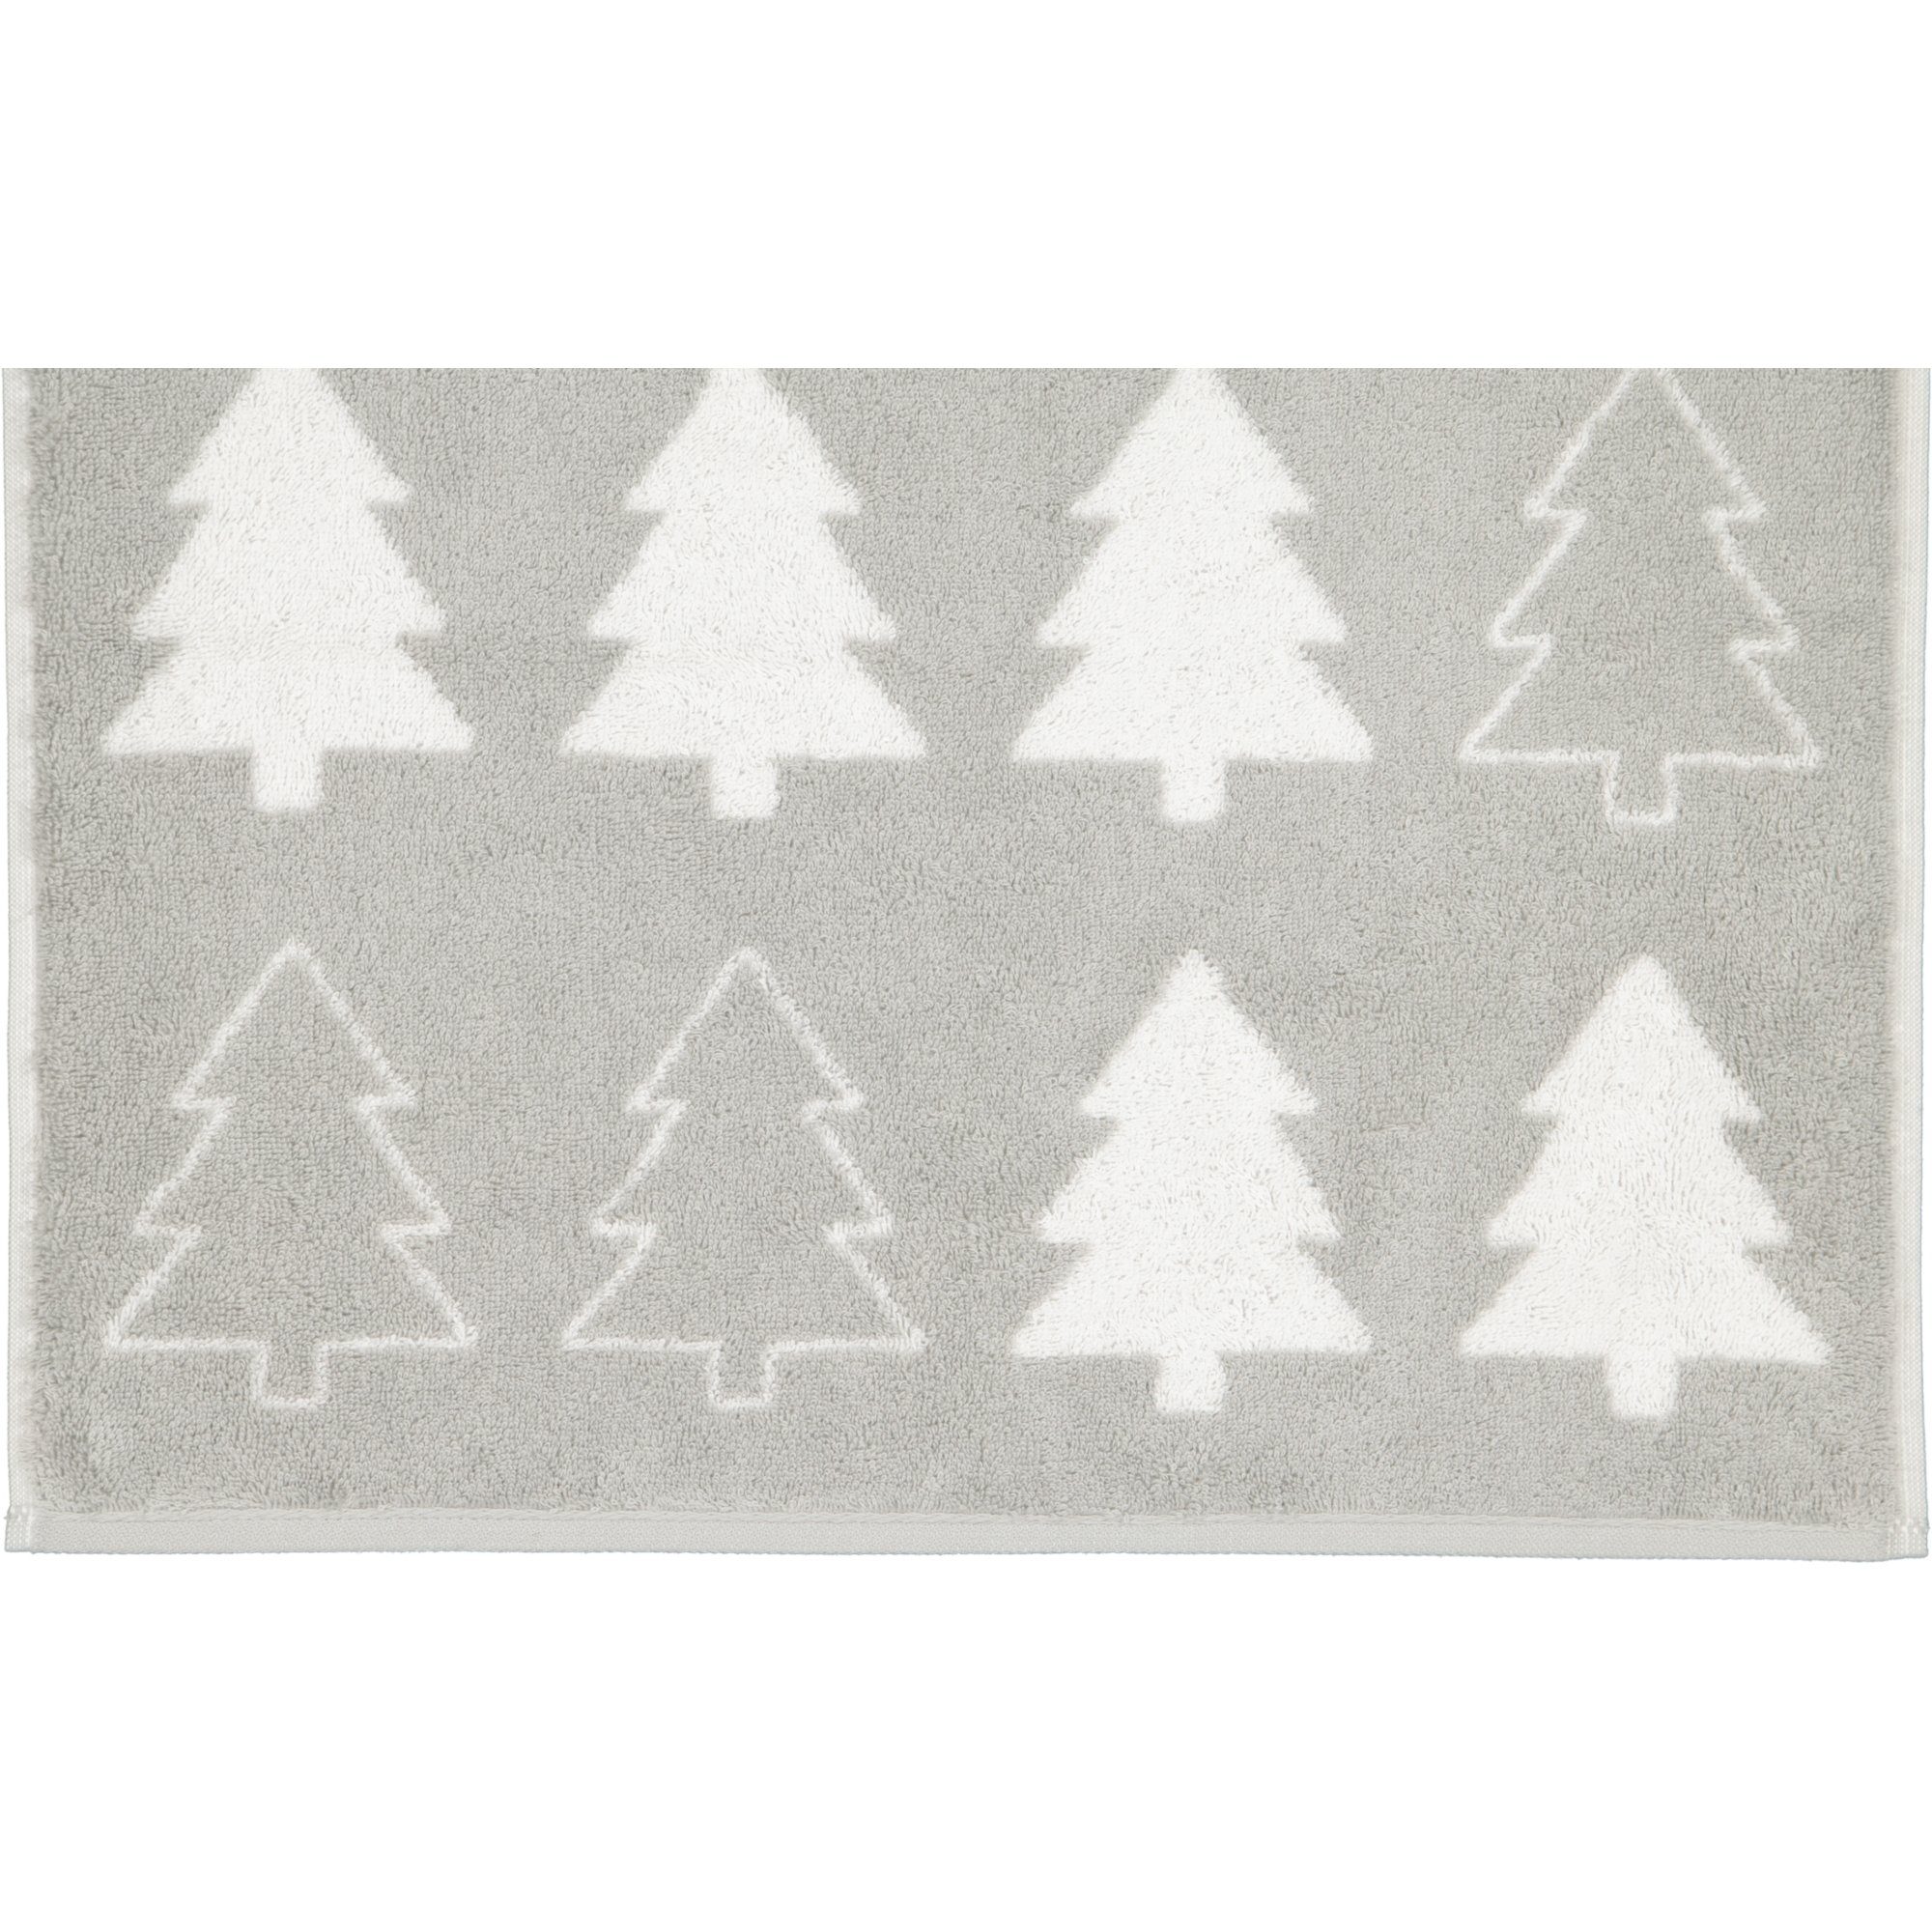 100% Edition Cawö Handtücher Baumwolle Tannenbäume, Christmas